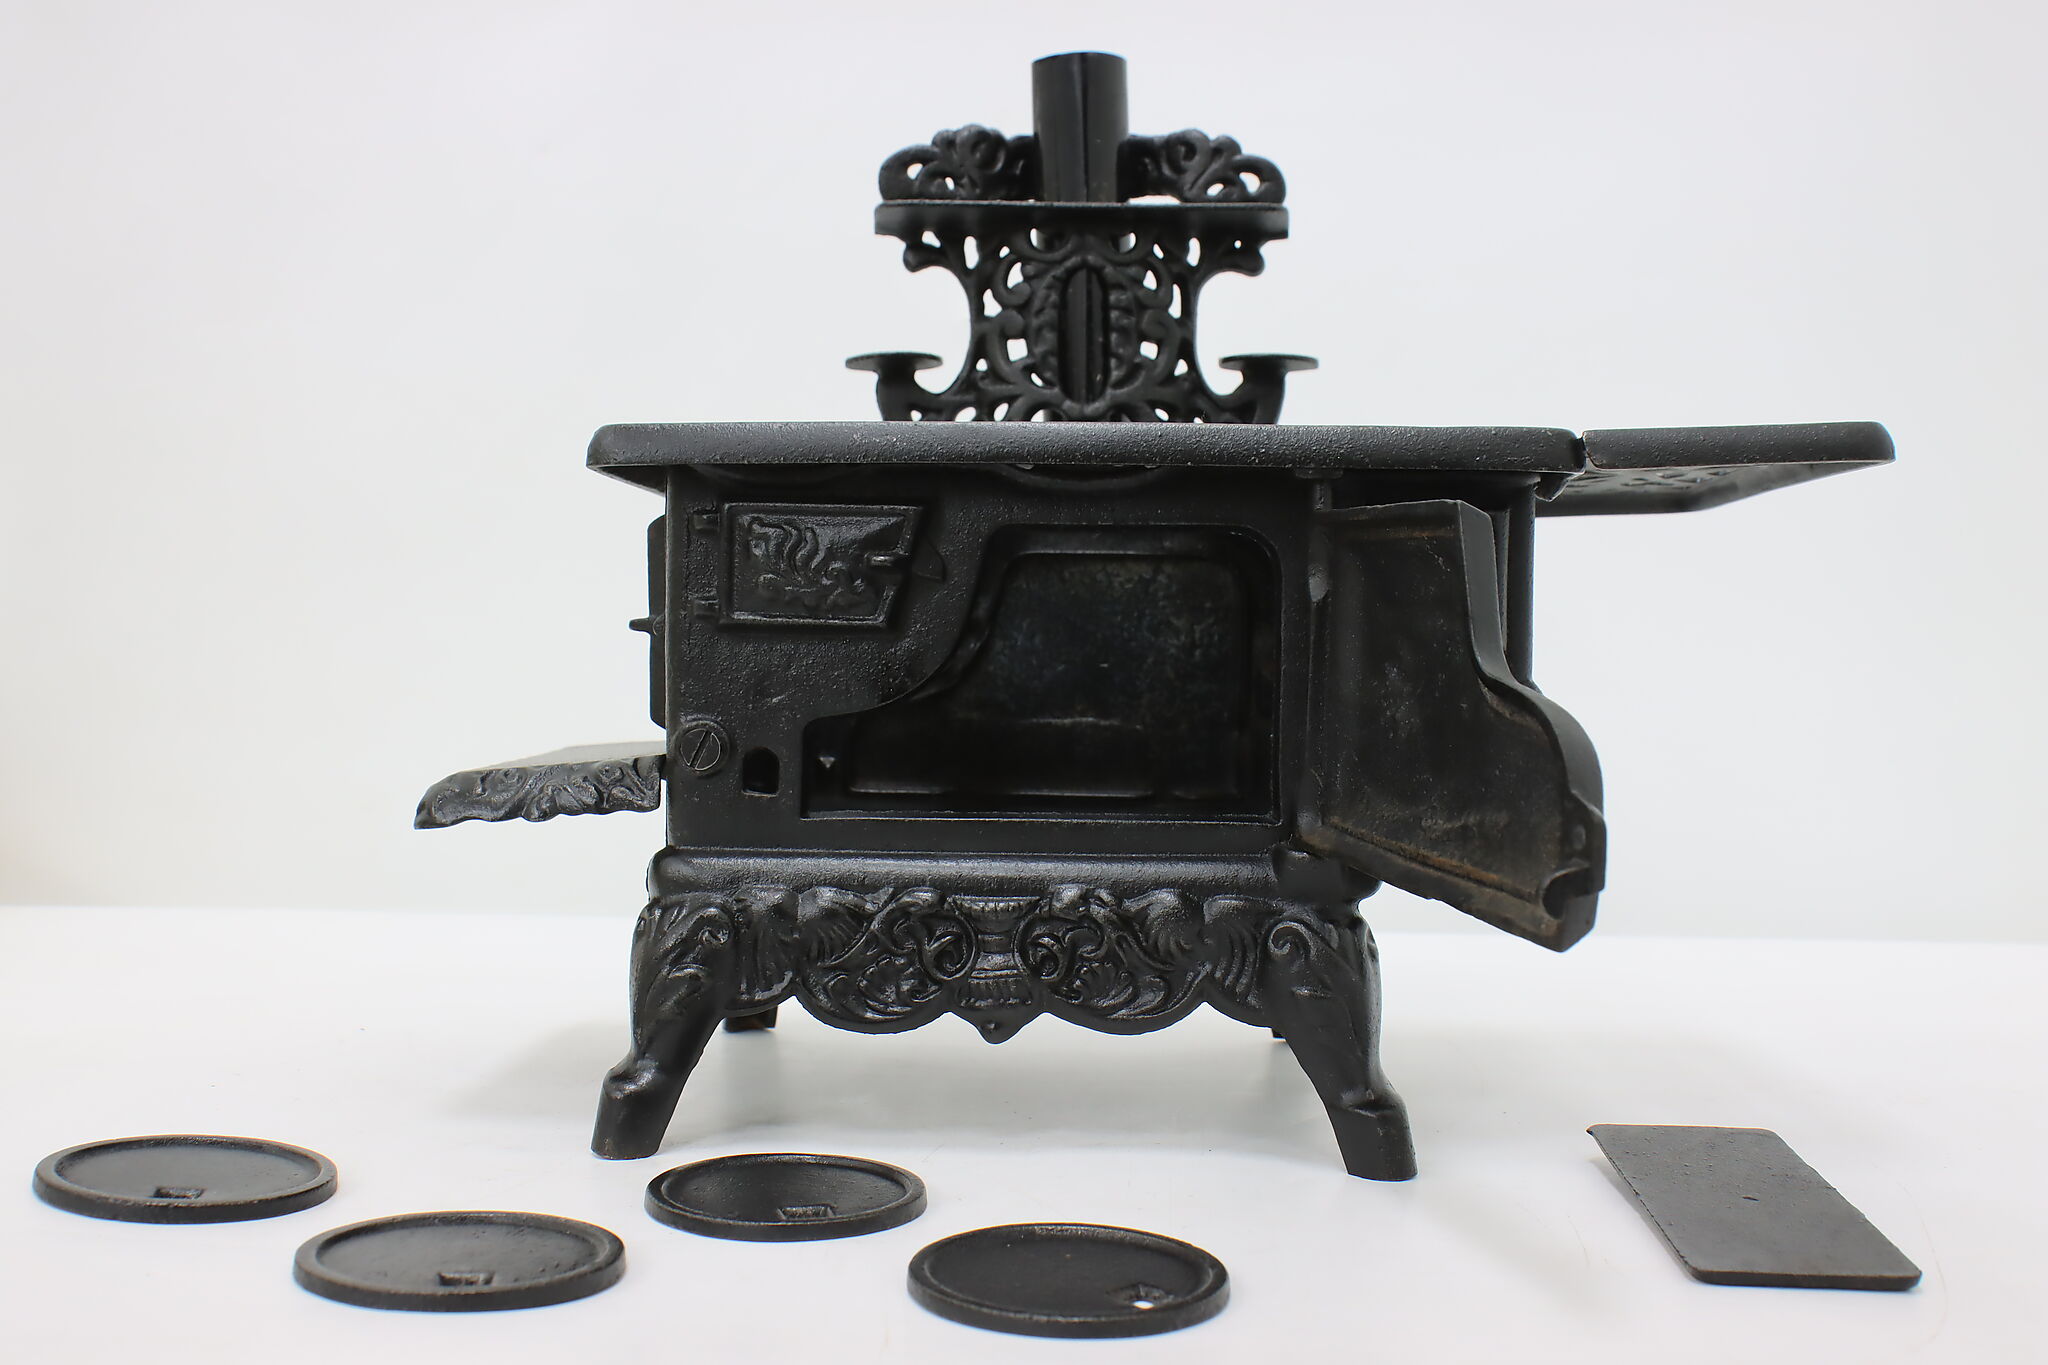 Vintage Mini Cast Iron Stove